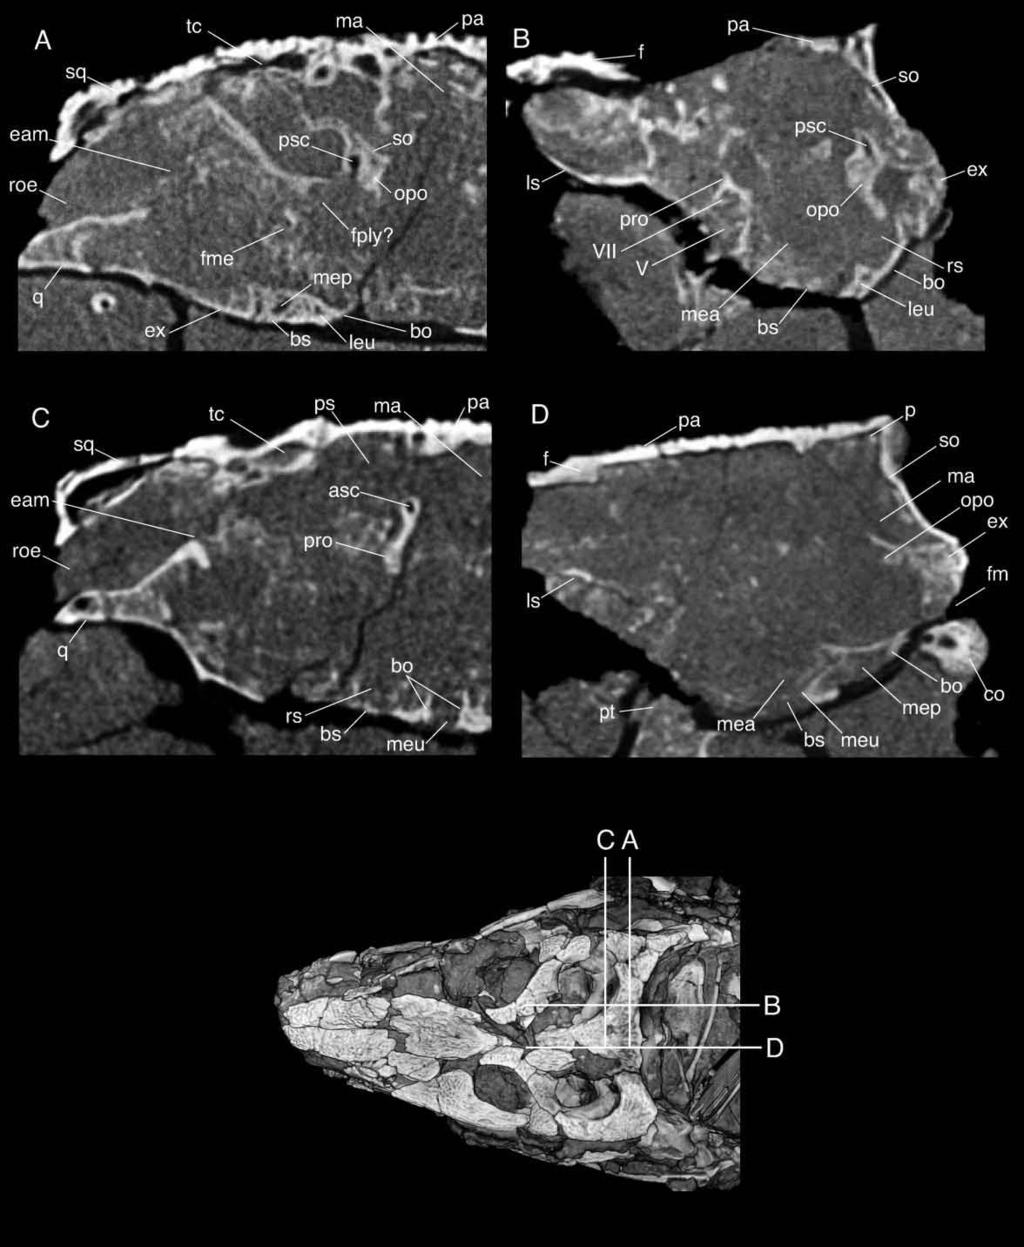 New Araripesuchus from Madagascar 285 Figure 33. FMNH PR 2297, Araripesuchus tsangatsangana. CT imagery of various braincase morphology including otic capsule and Eustachian sinuses.